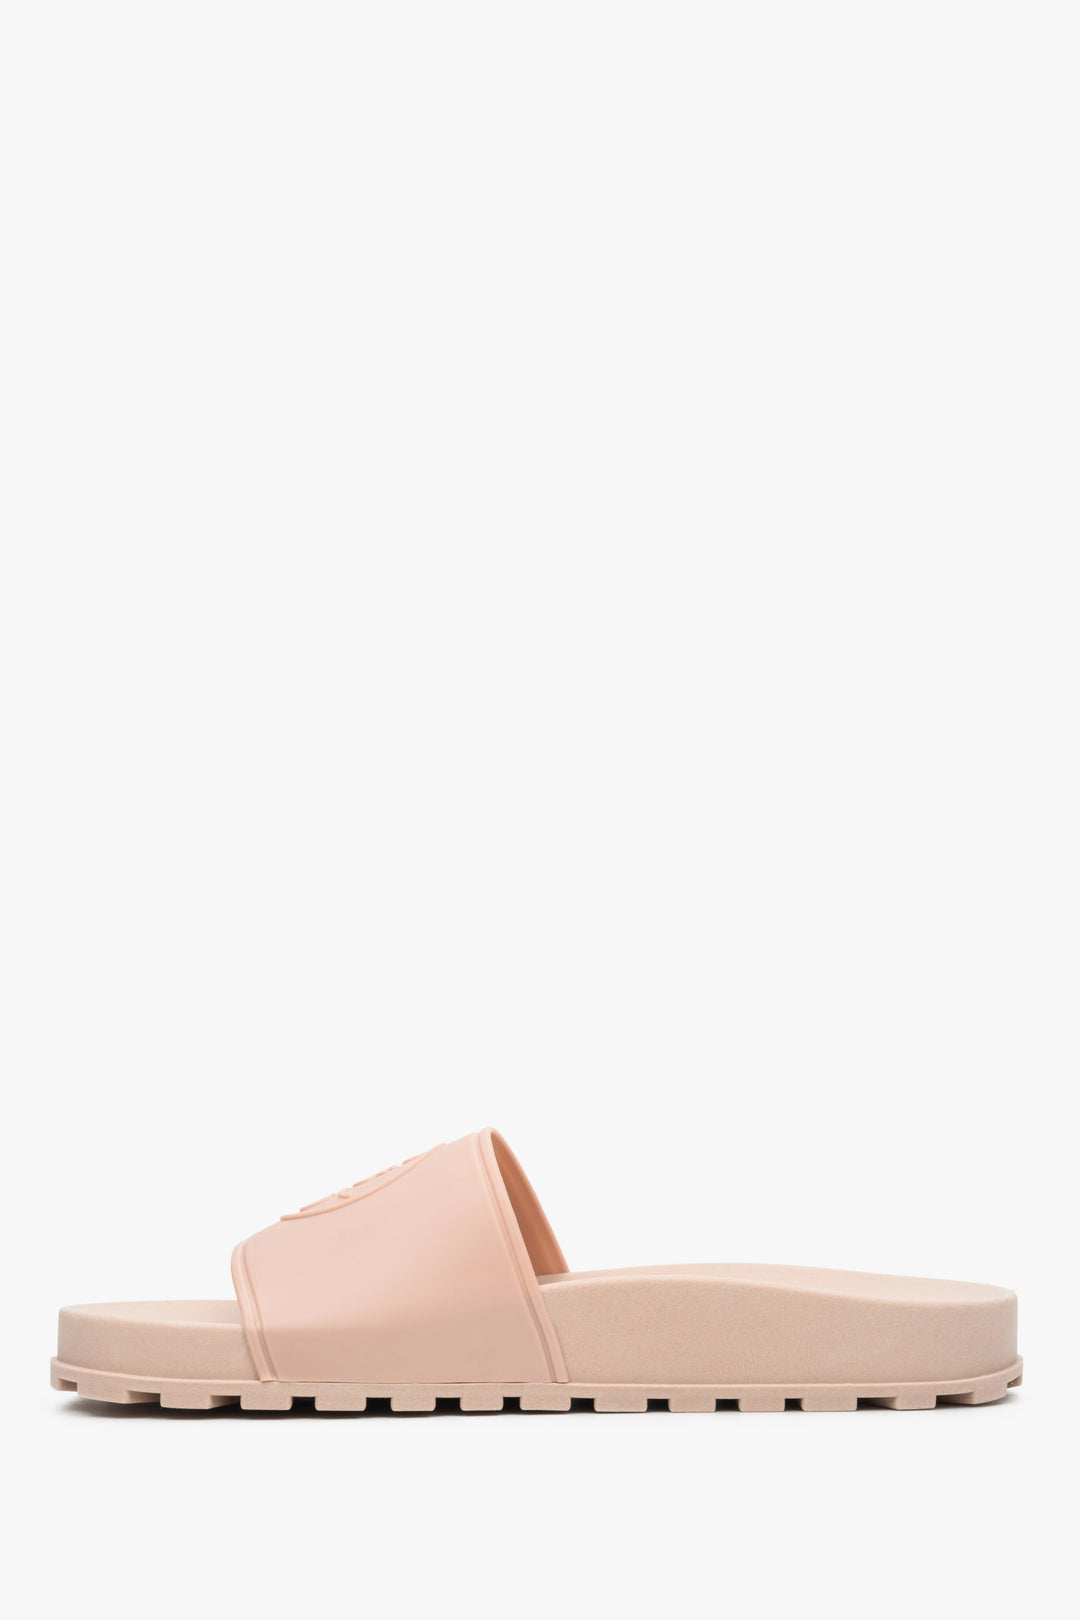 Women's light pink Estro rubber flip-Flops - shoe profile.